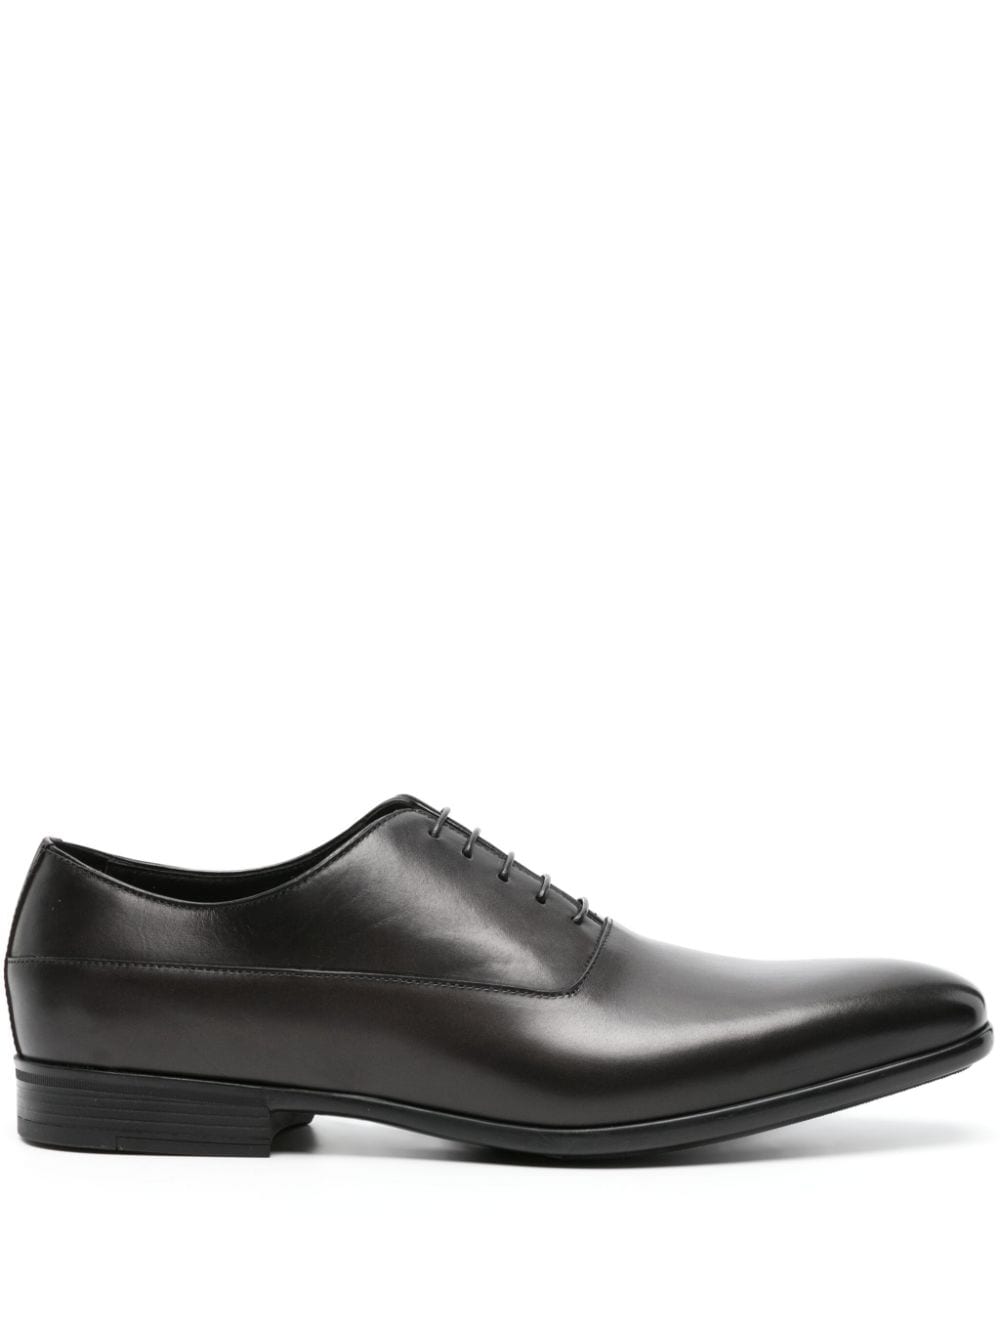 Doucal's patent leather Oxford shoes - Black von Doucal's